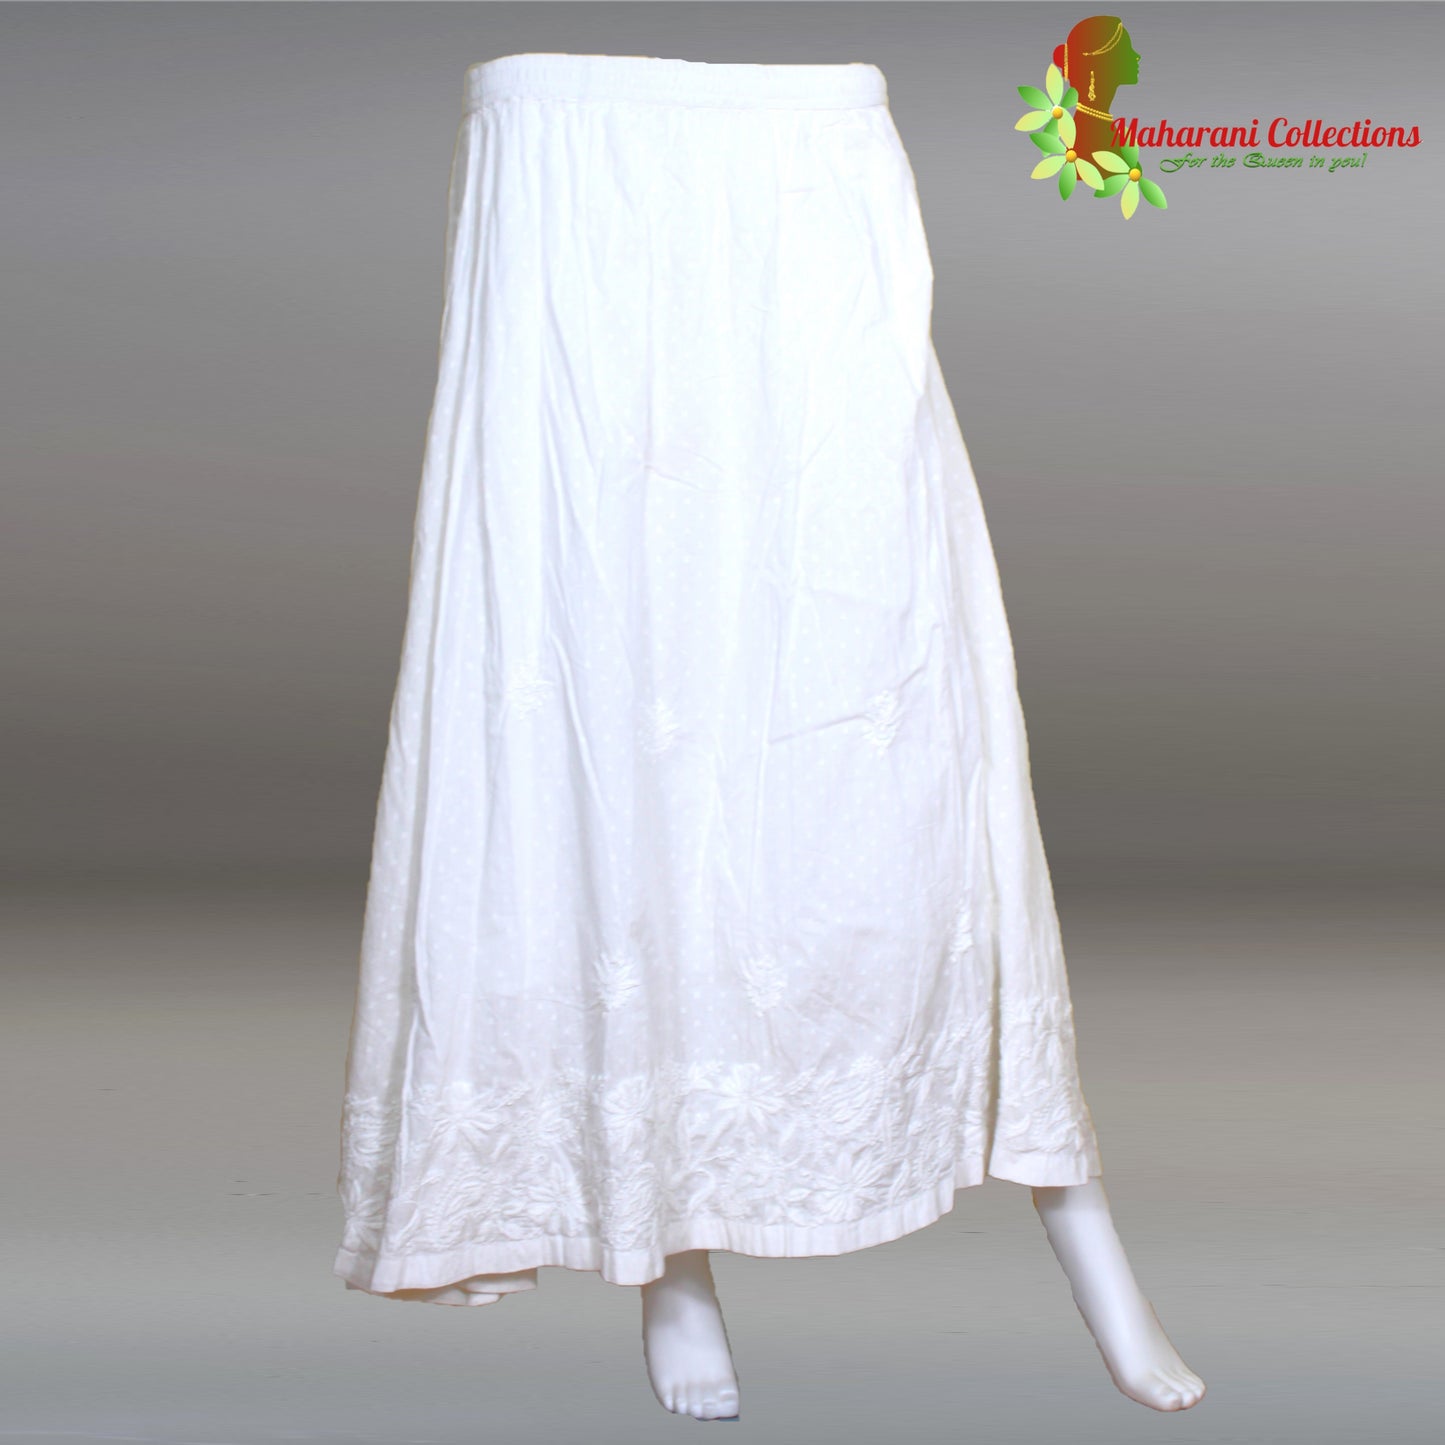 Maharani's Lucknowi Chikankari Long Skirt - White (M) - Pure Cotton